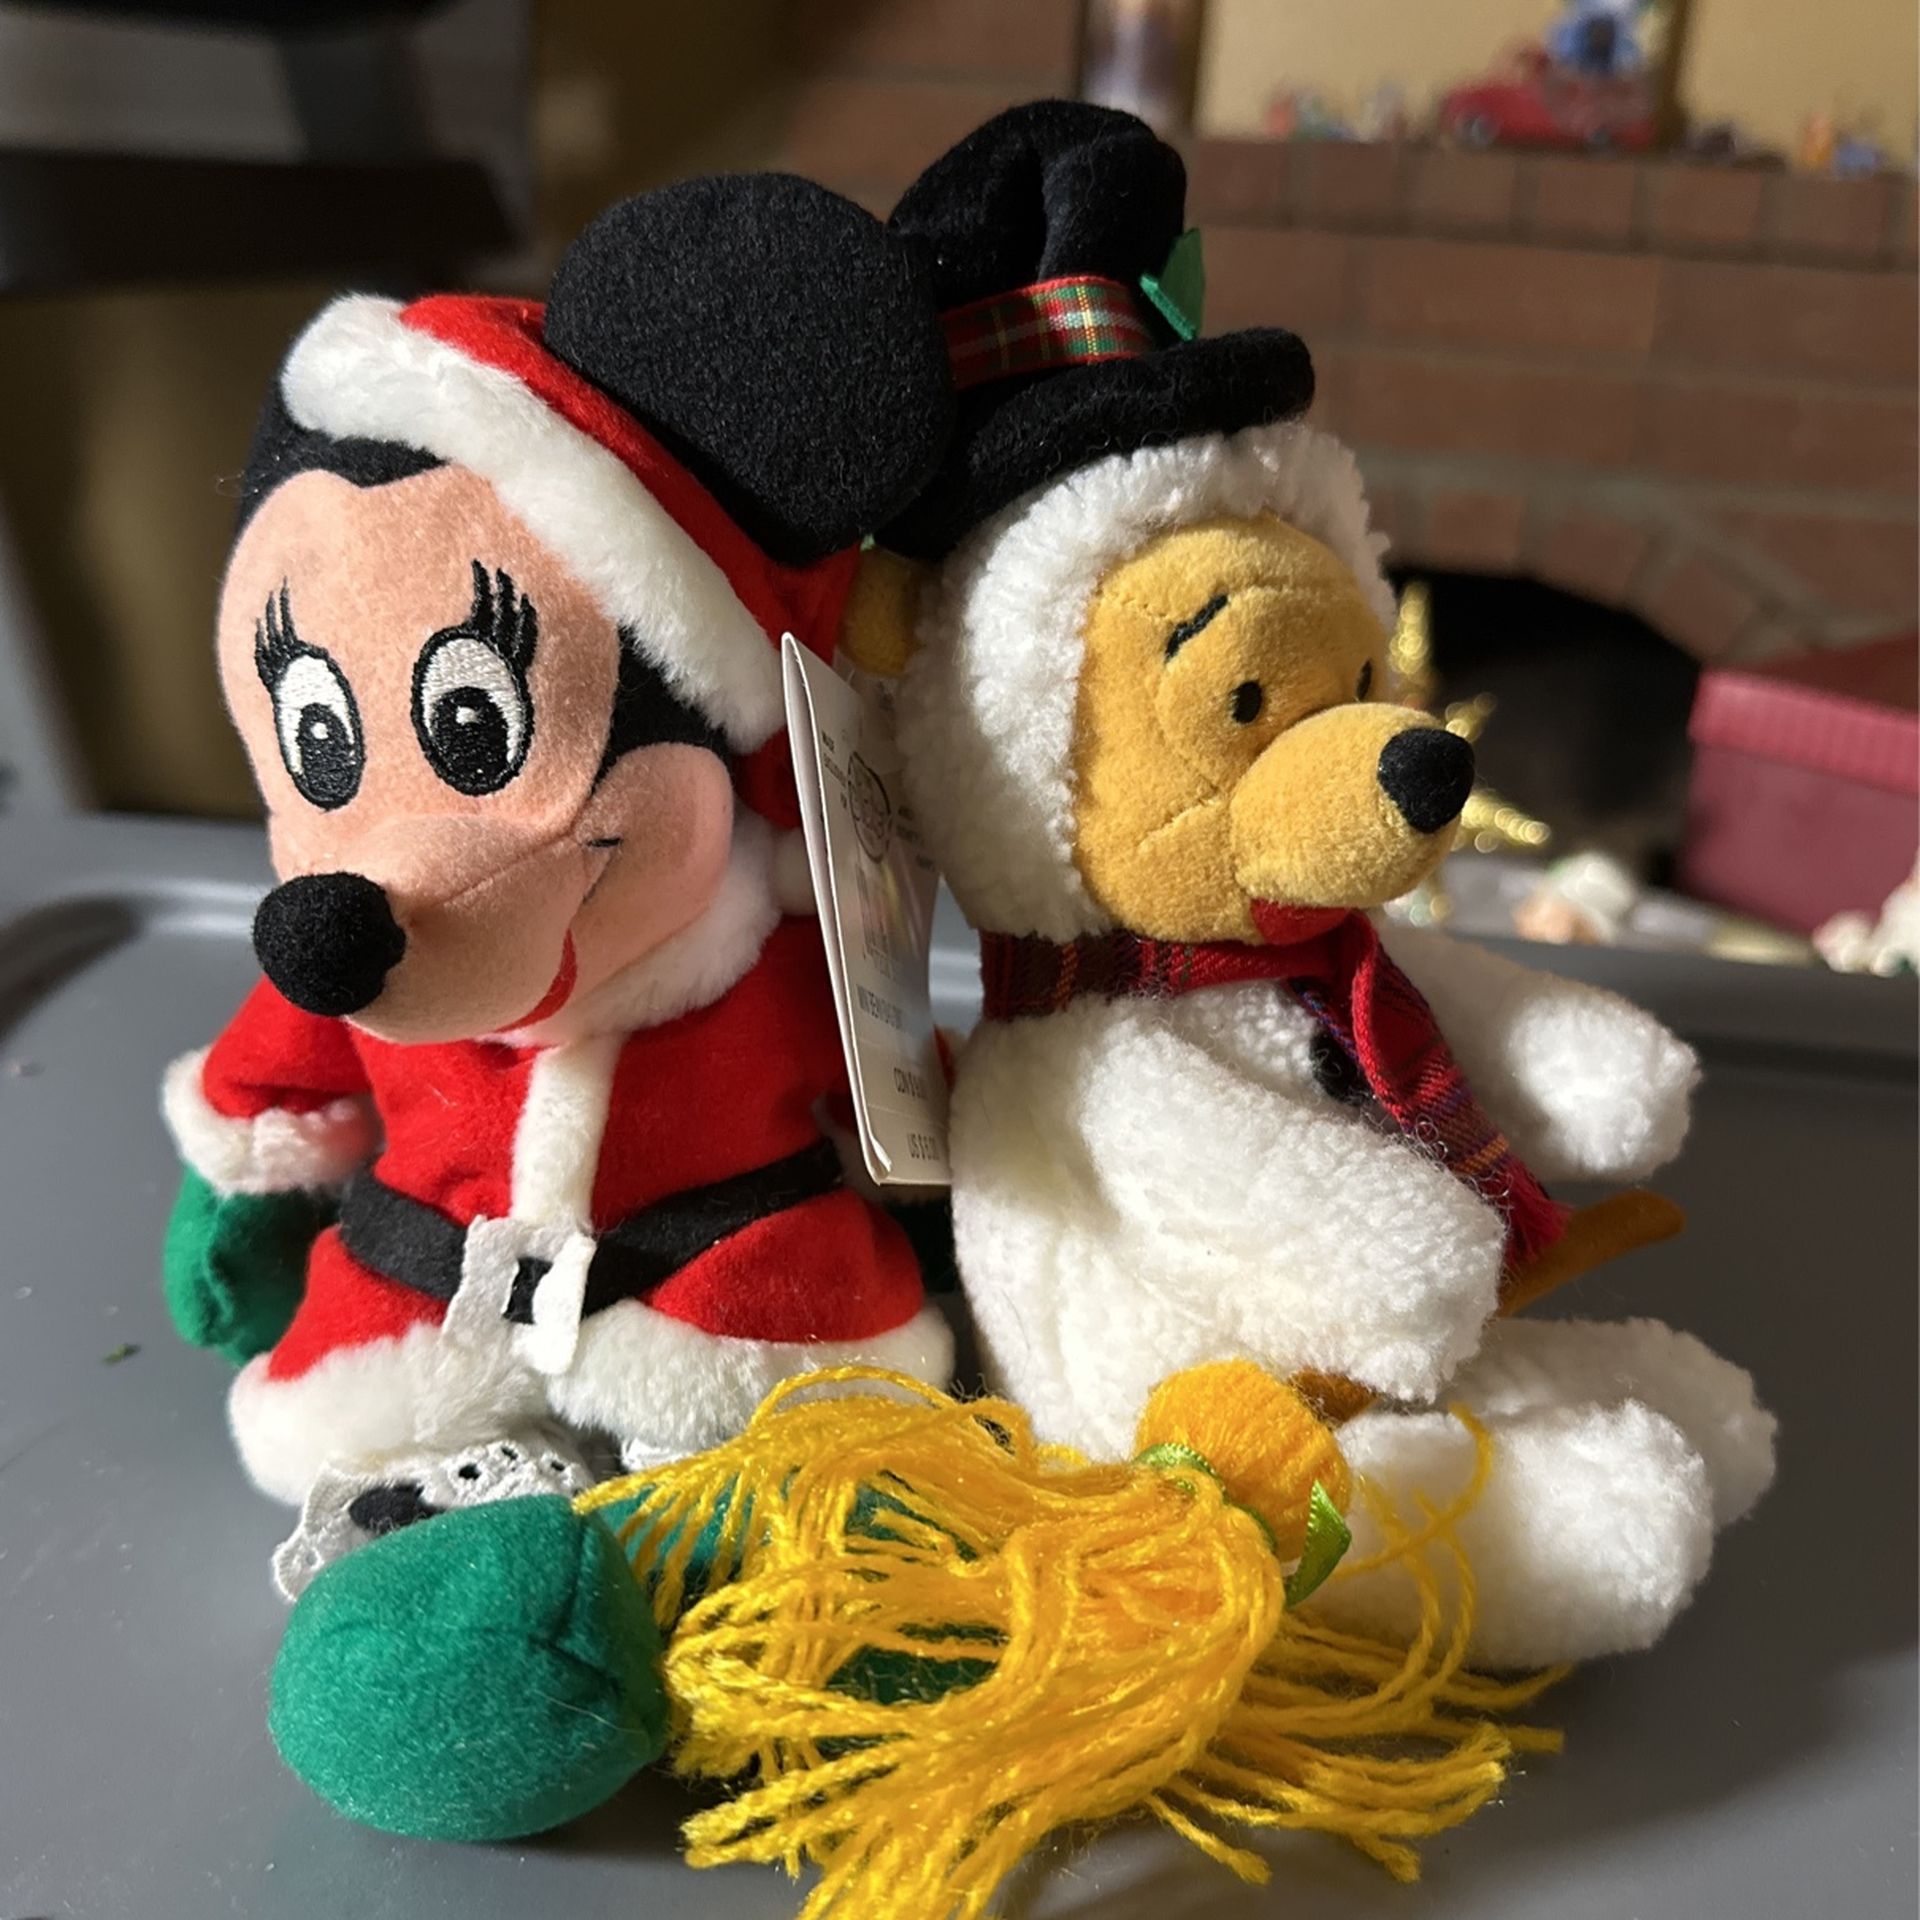 Minnie And Winnie The Pooh Stuff Animal Toys 